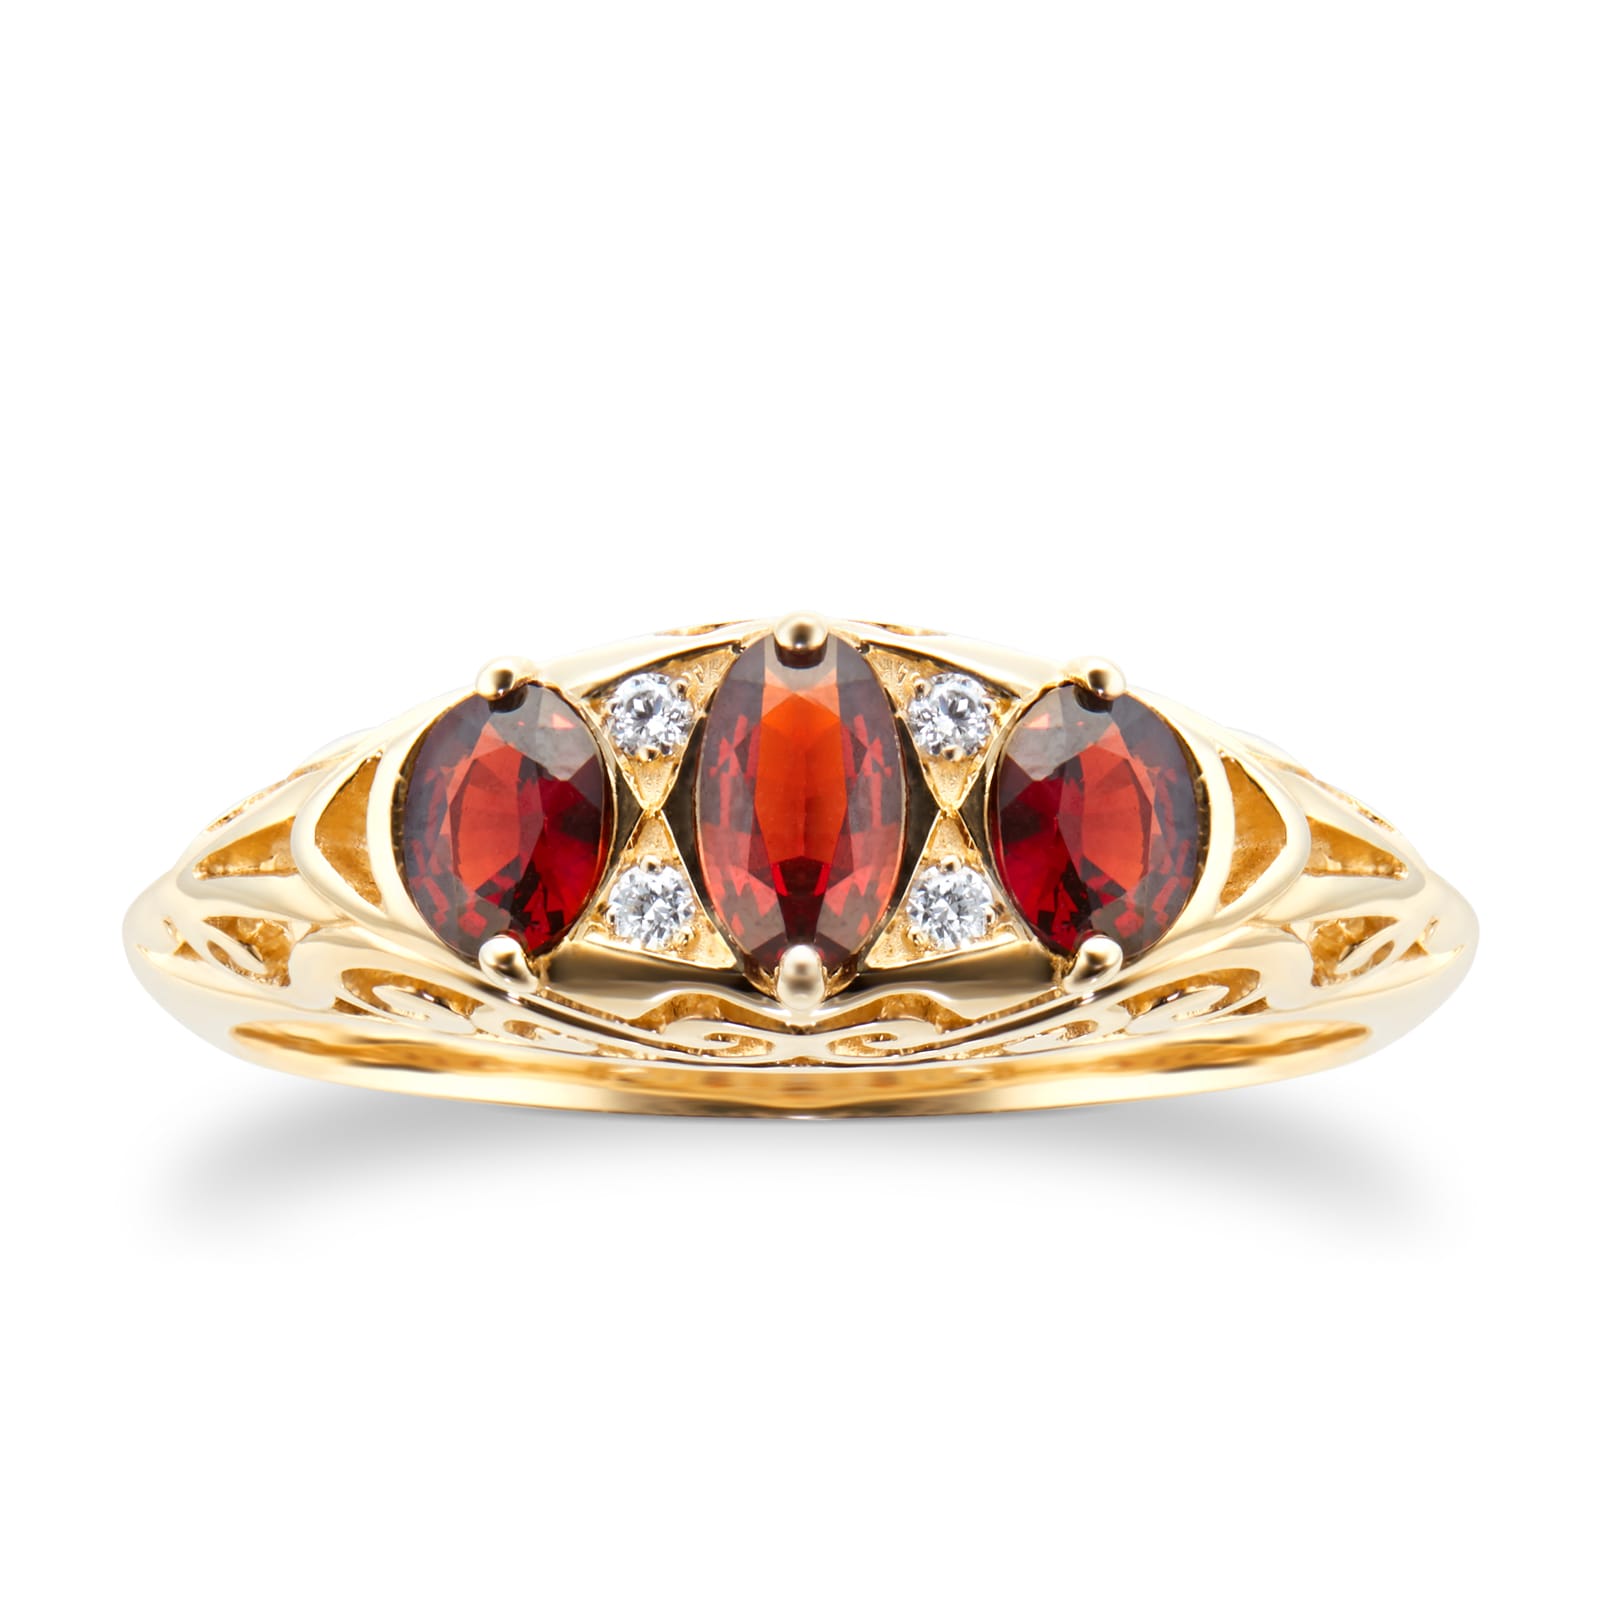 9ct Yellow Gold Victorian Style 3 Stone Garnet & Diamond Ring - Ring Size P.5